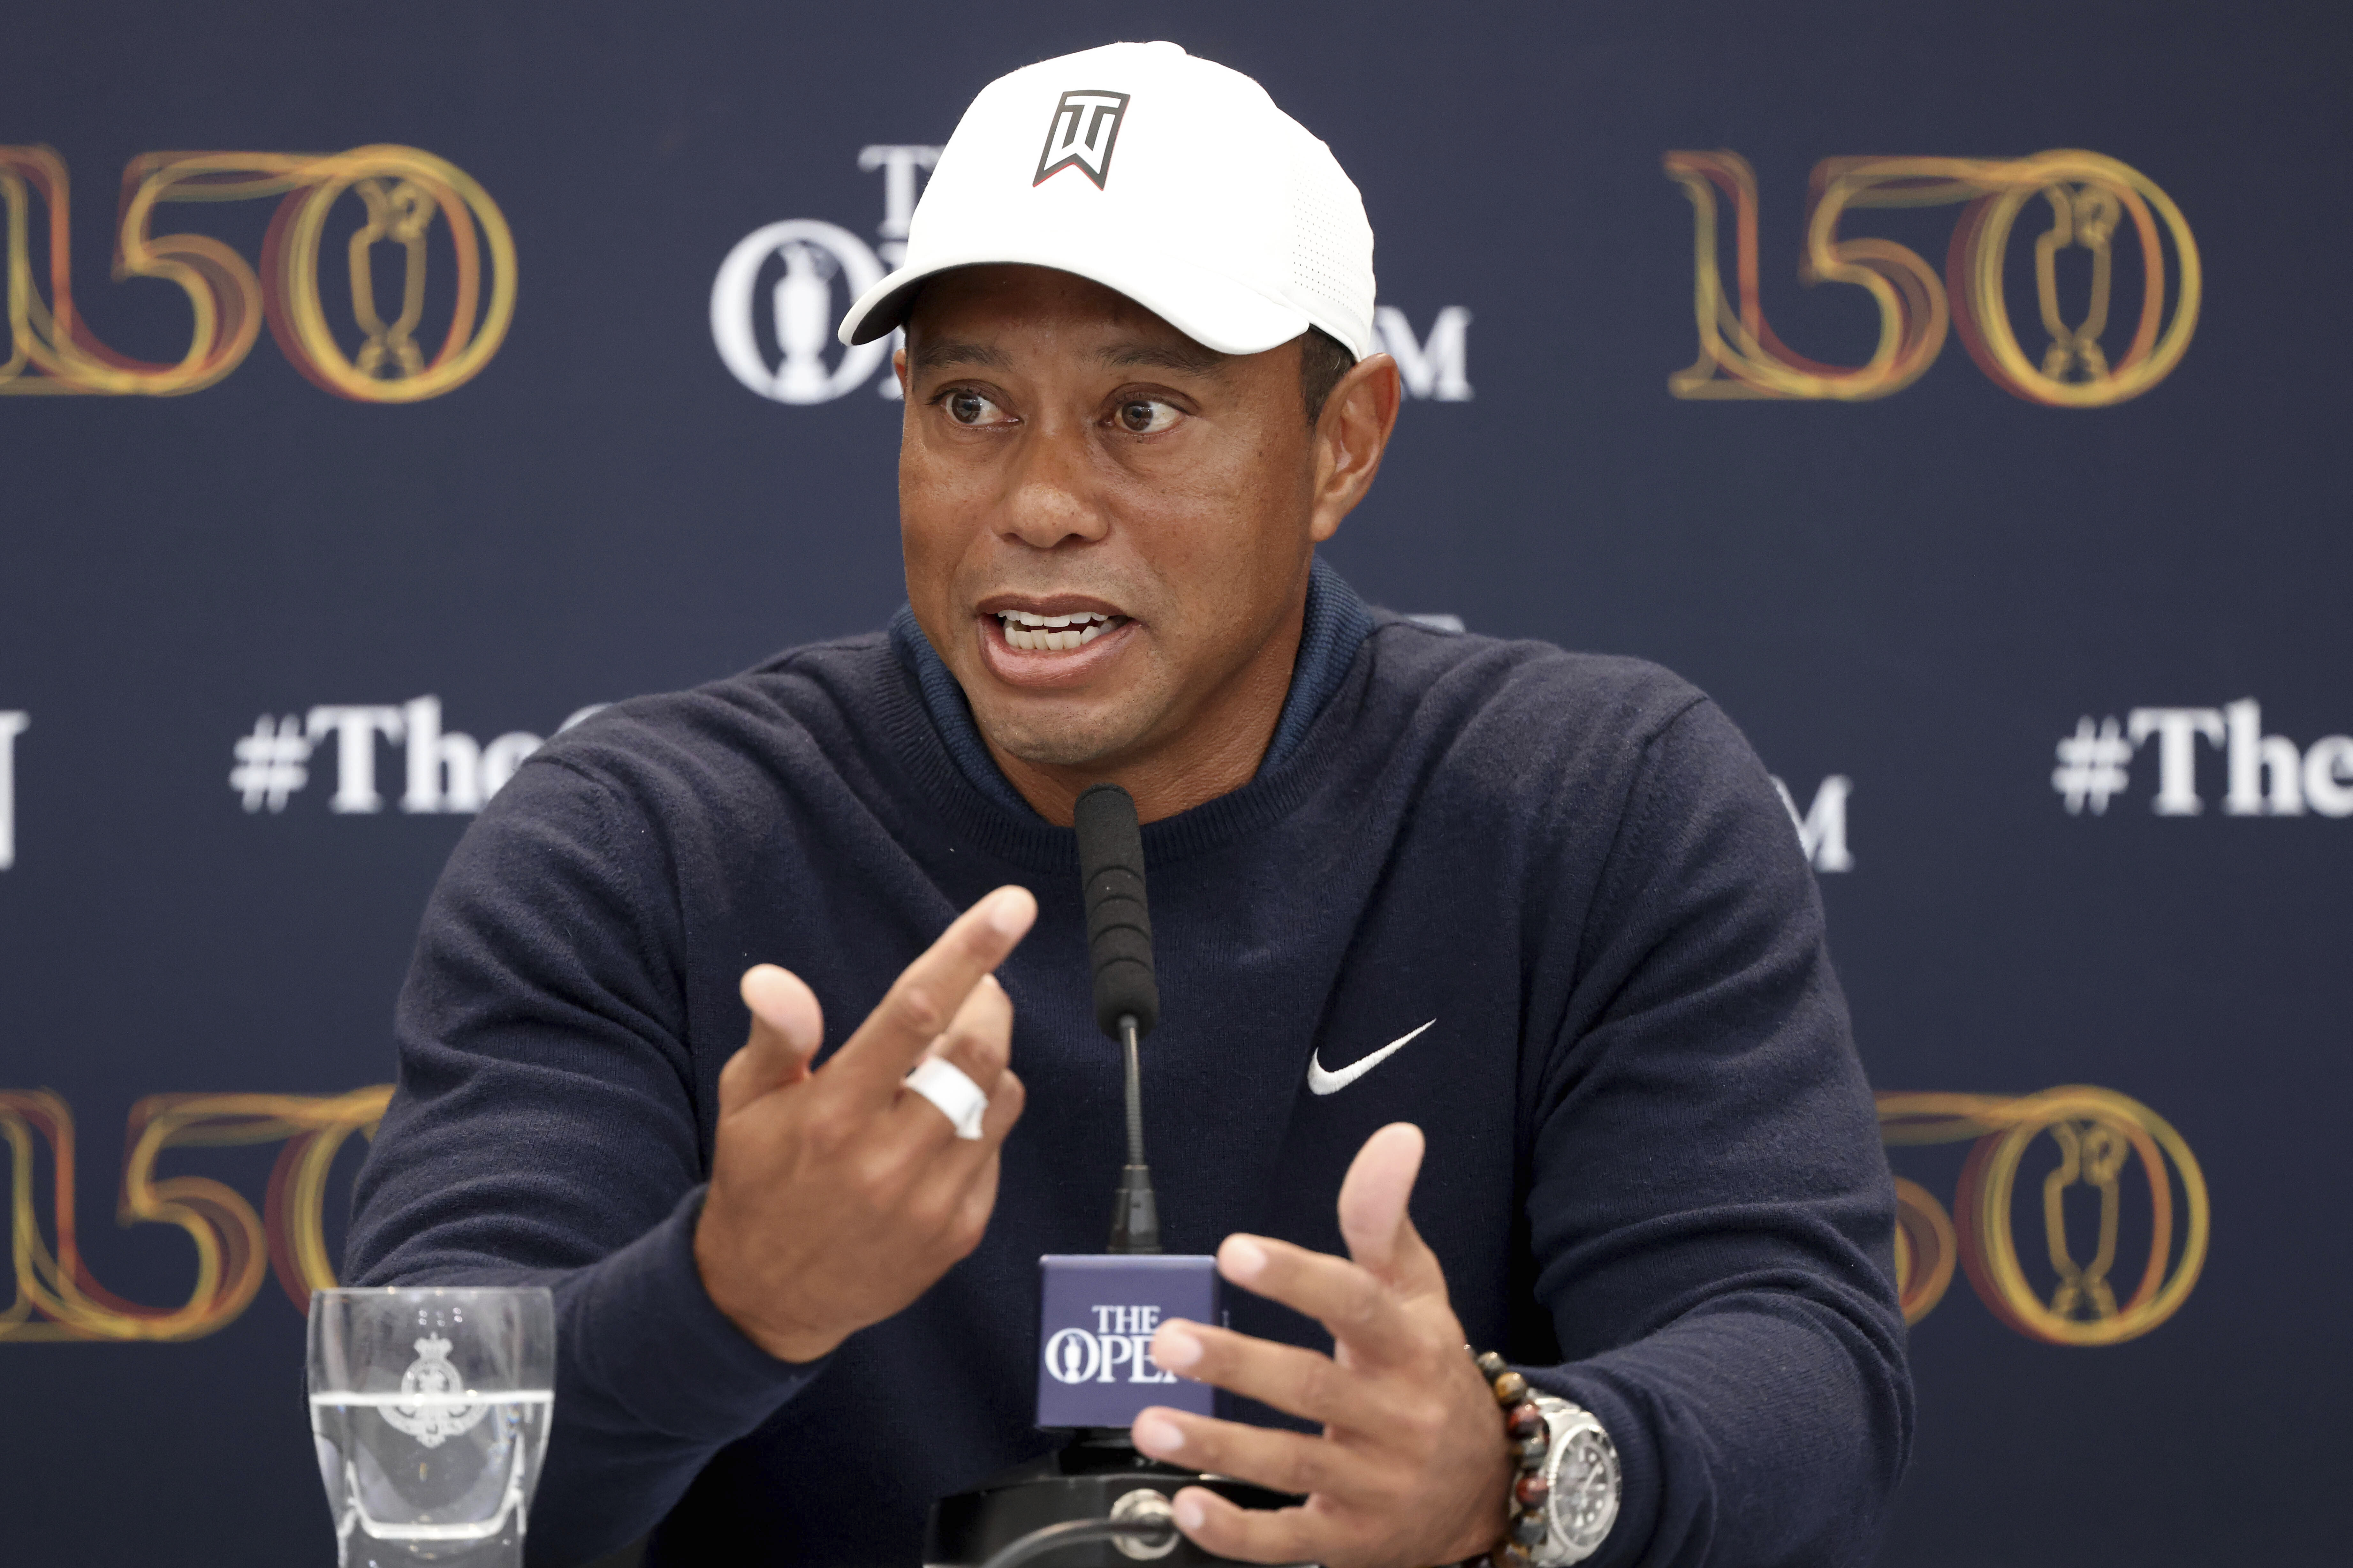 Tiger Woods LIV Golf defectors turned their back on game